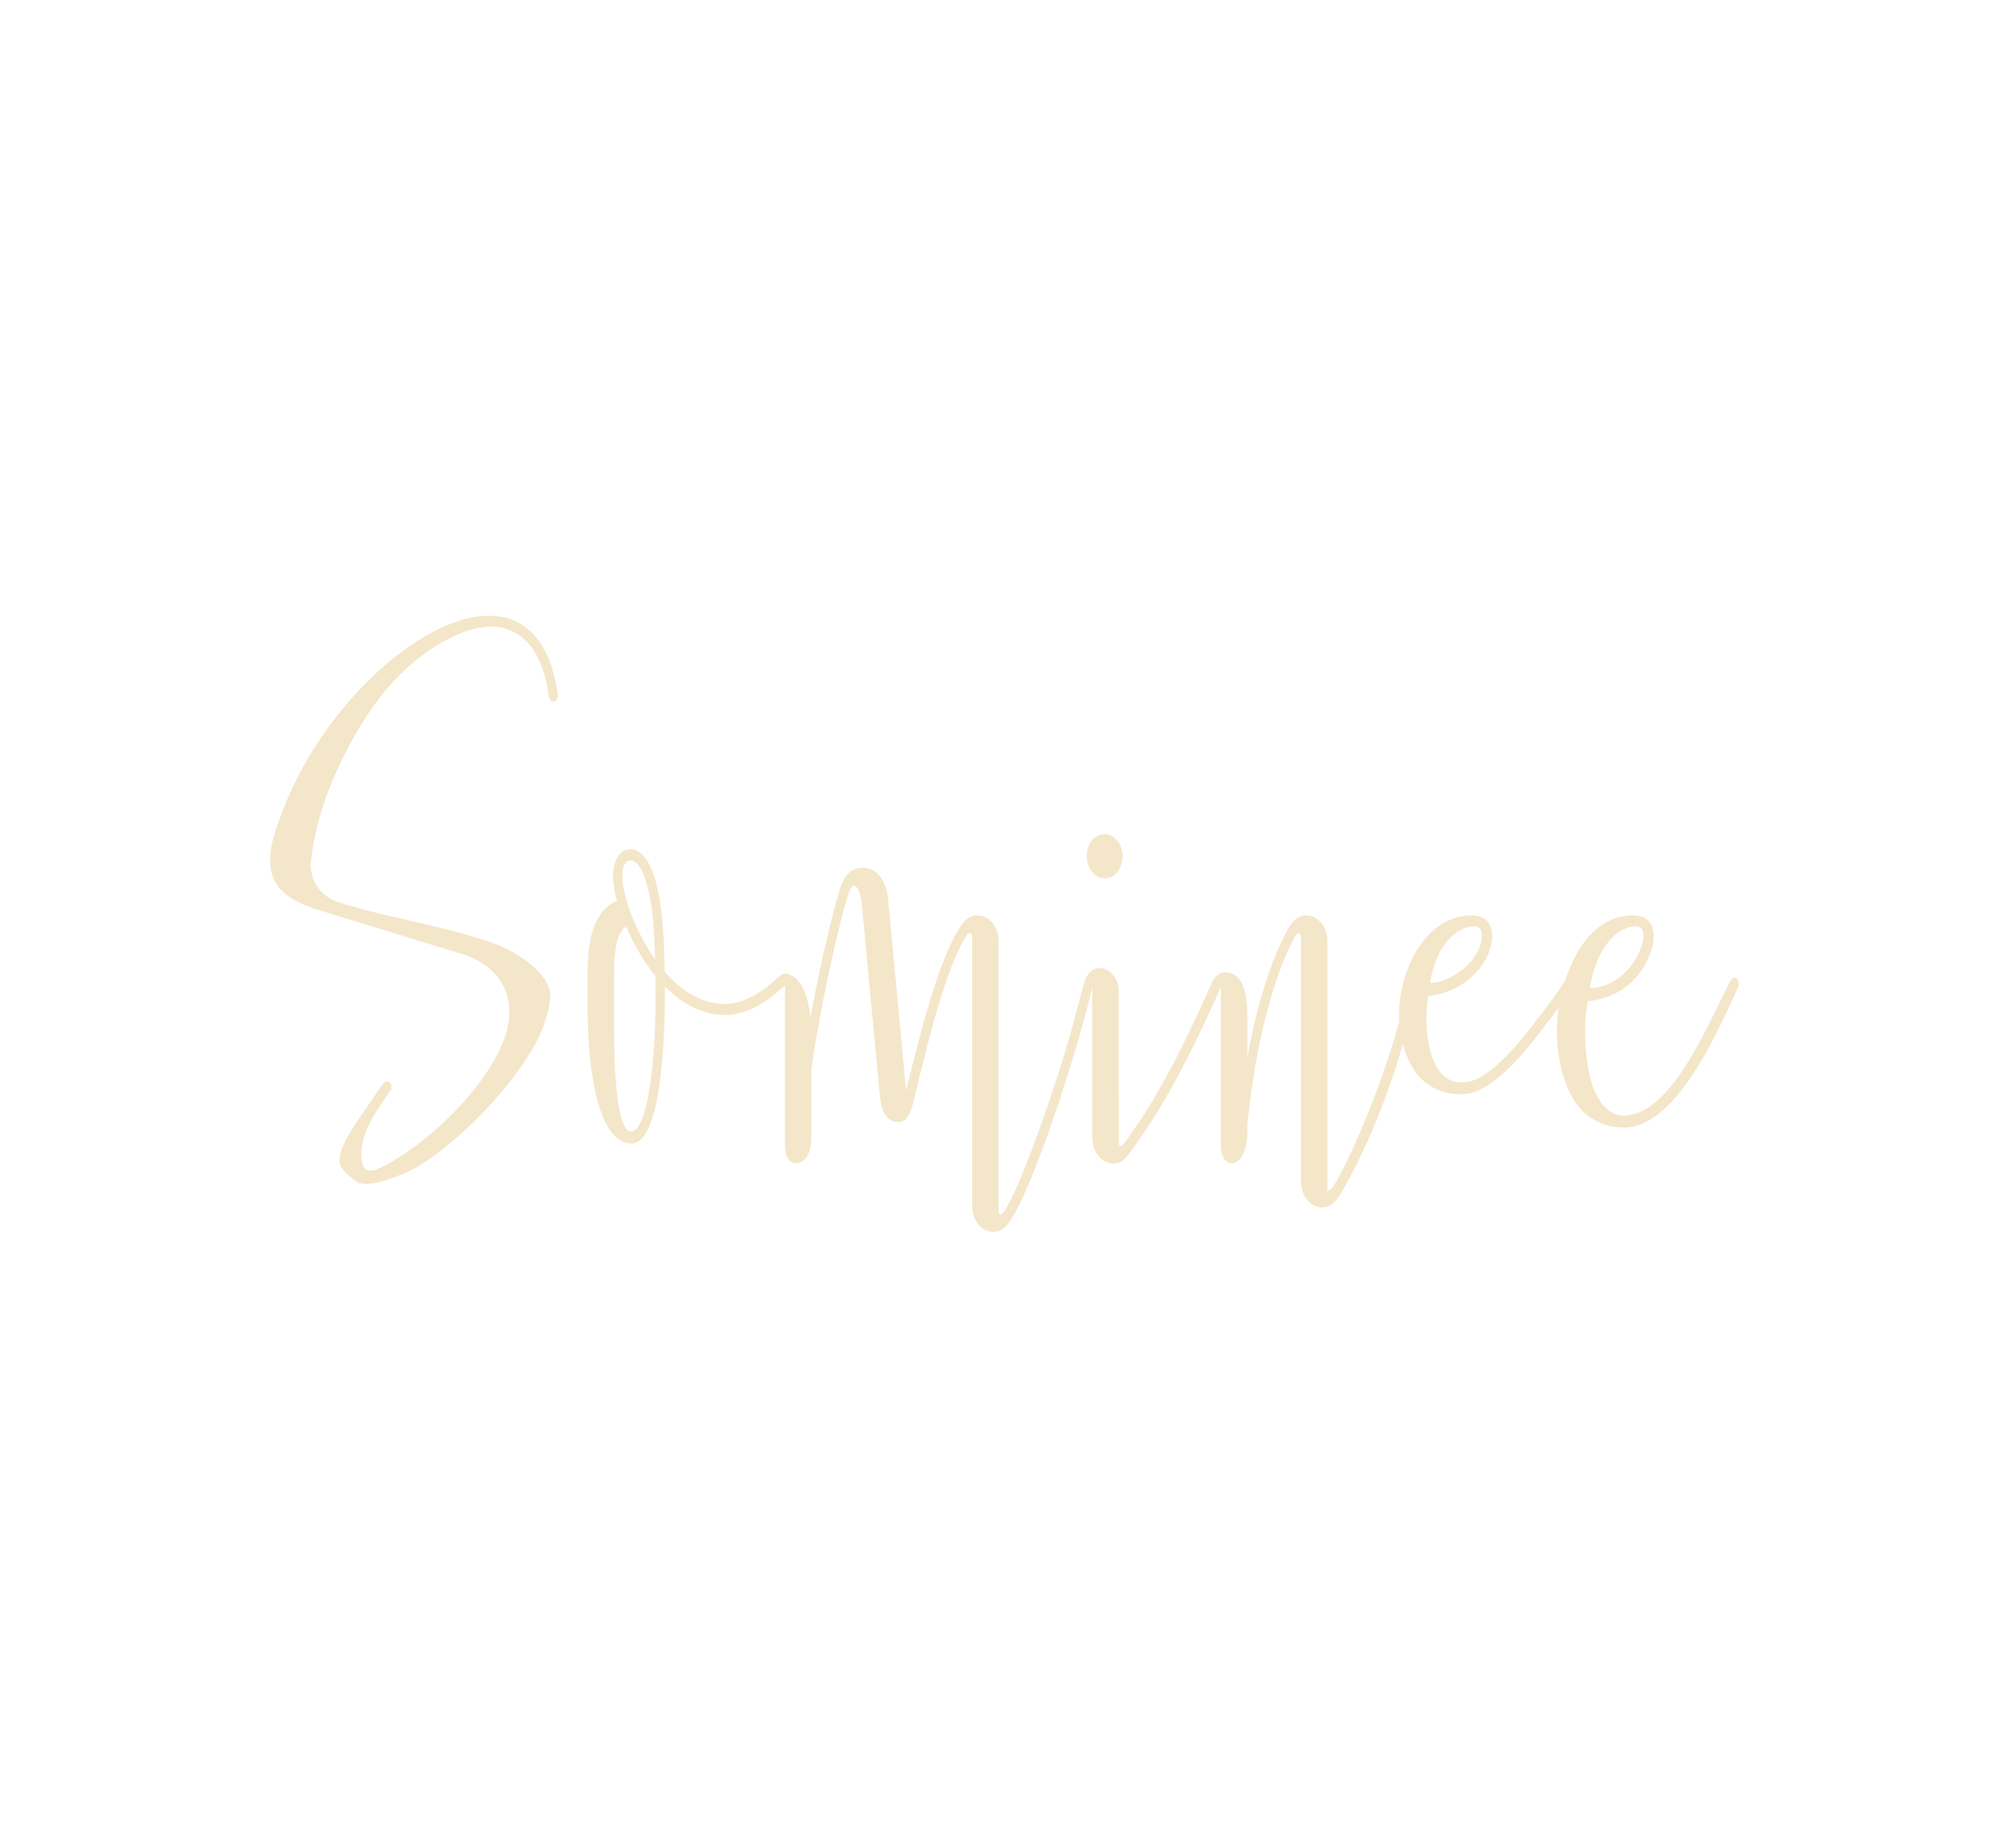 Logo of Sominee